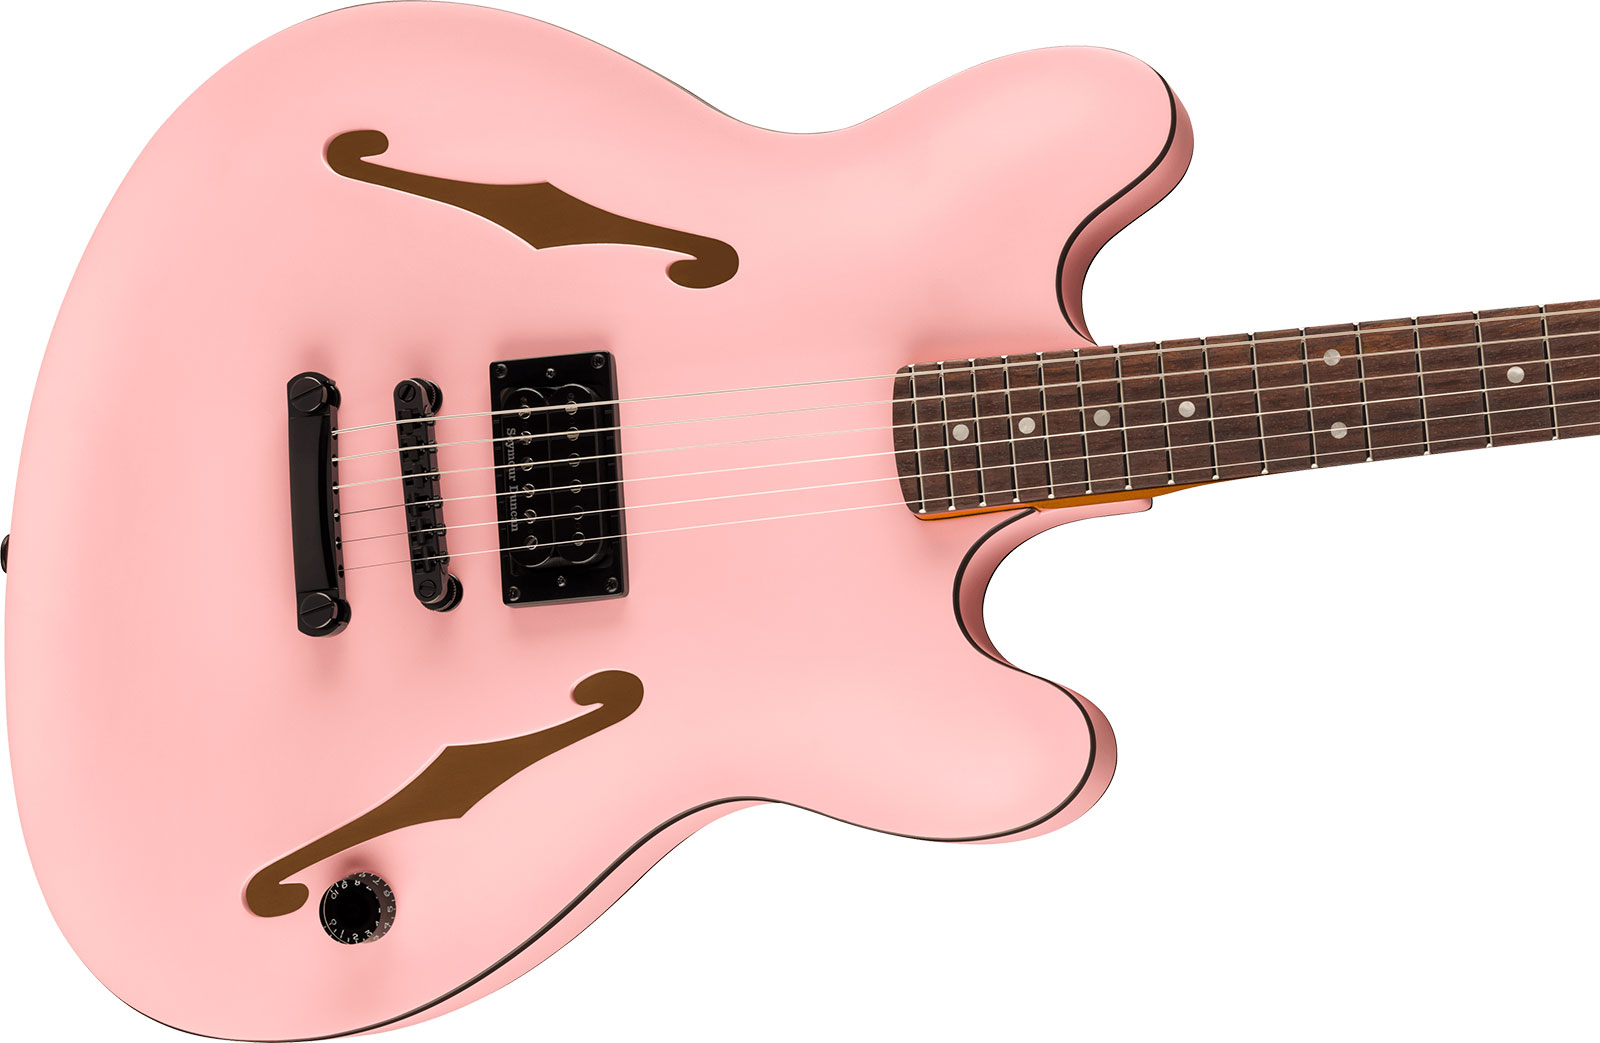 Fender Tom Delonge Starcaster Signature 1h Seymour Duncan Ht Rw - Satin Shell Pink - Semi-hollow electric guitar - Variation 2